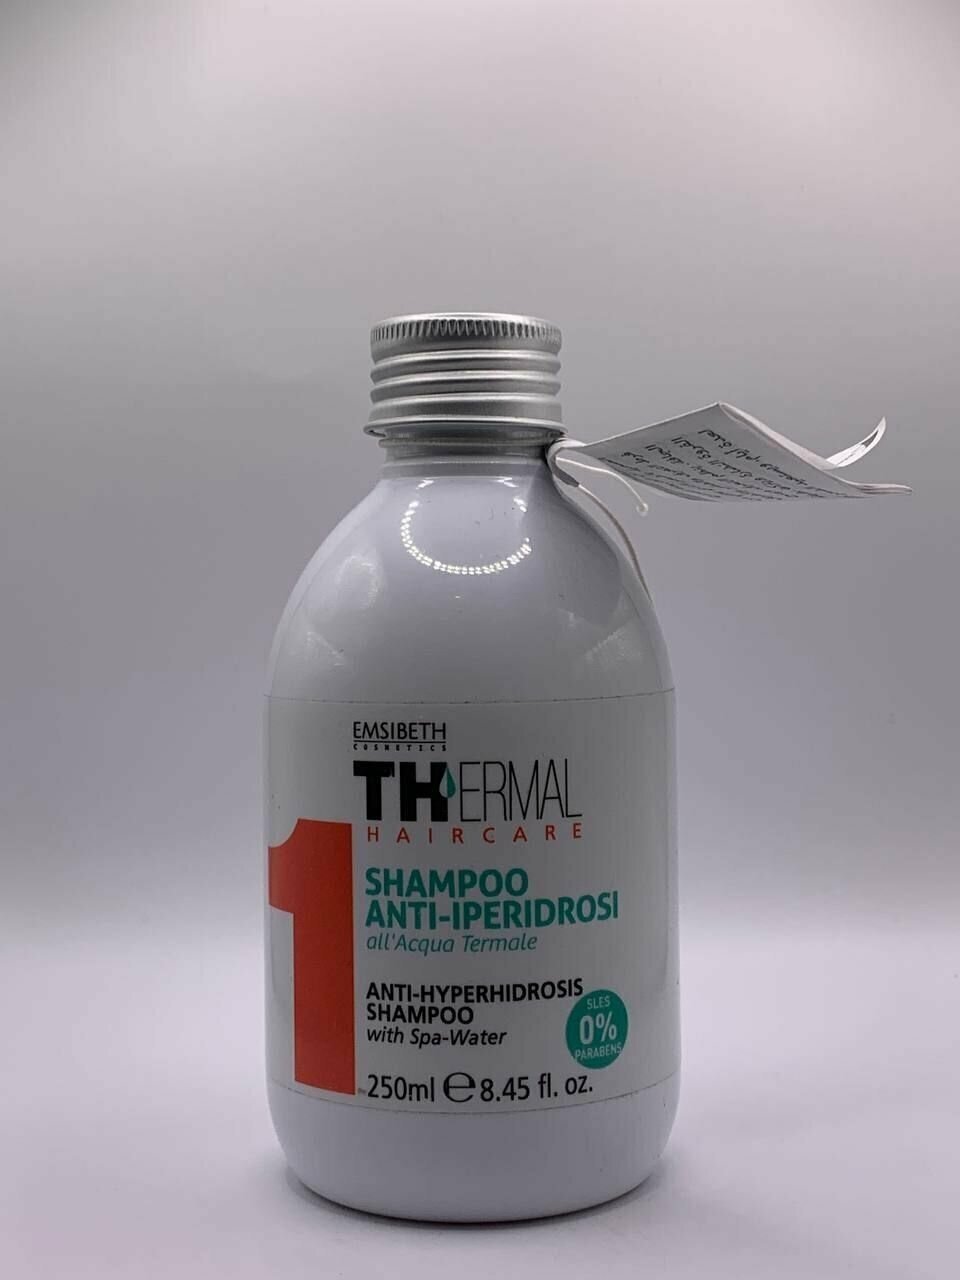 Emsibeth Thermal Anti-hyperhidrosis Shampoo Шампунь СПА с Термальной водой против гипергидроза